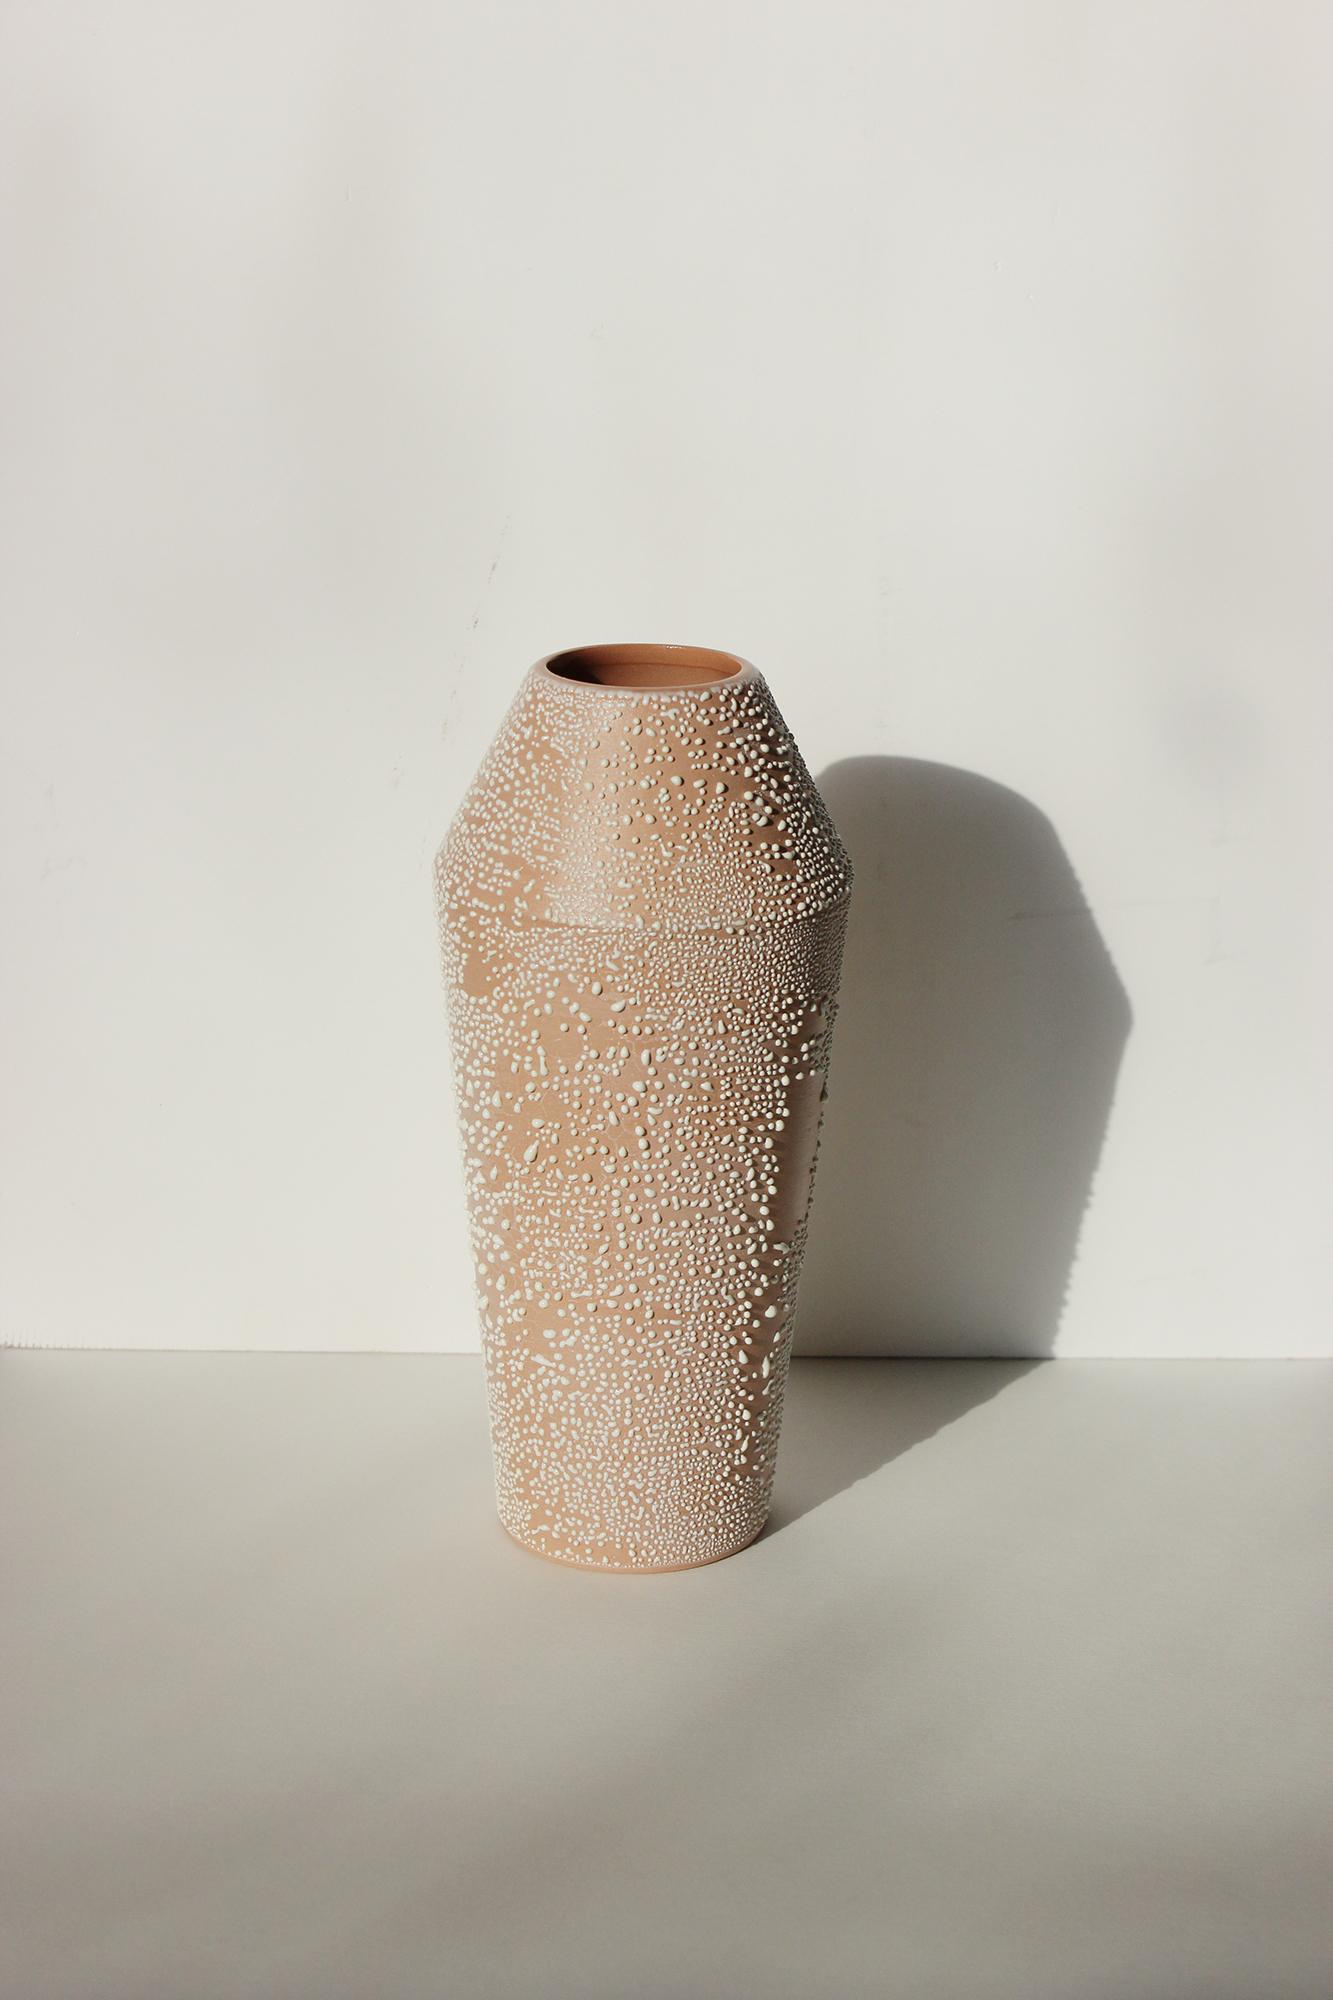 American Contemporary Large Dew Vase #1 White Ceramic and Glaze, Handmade